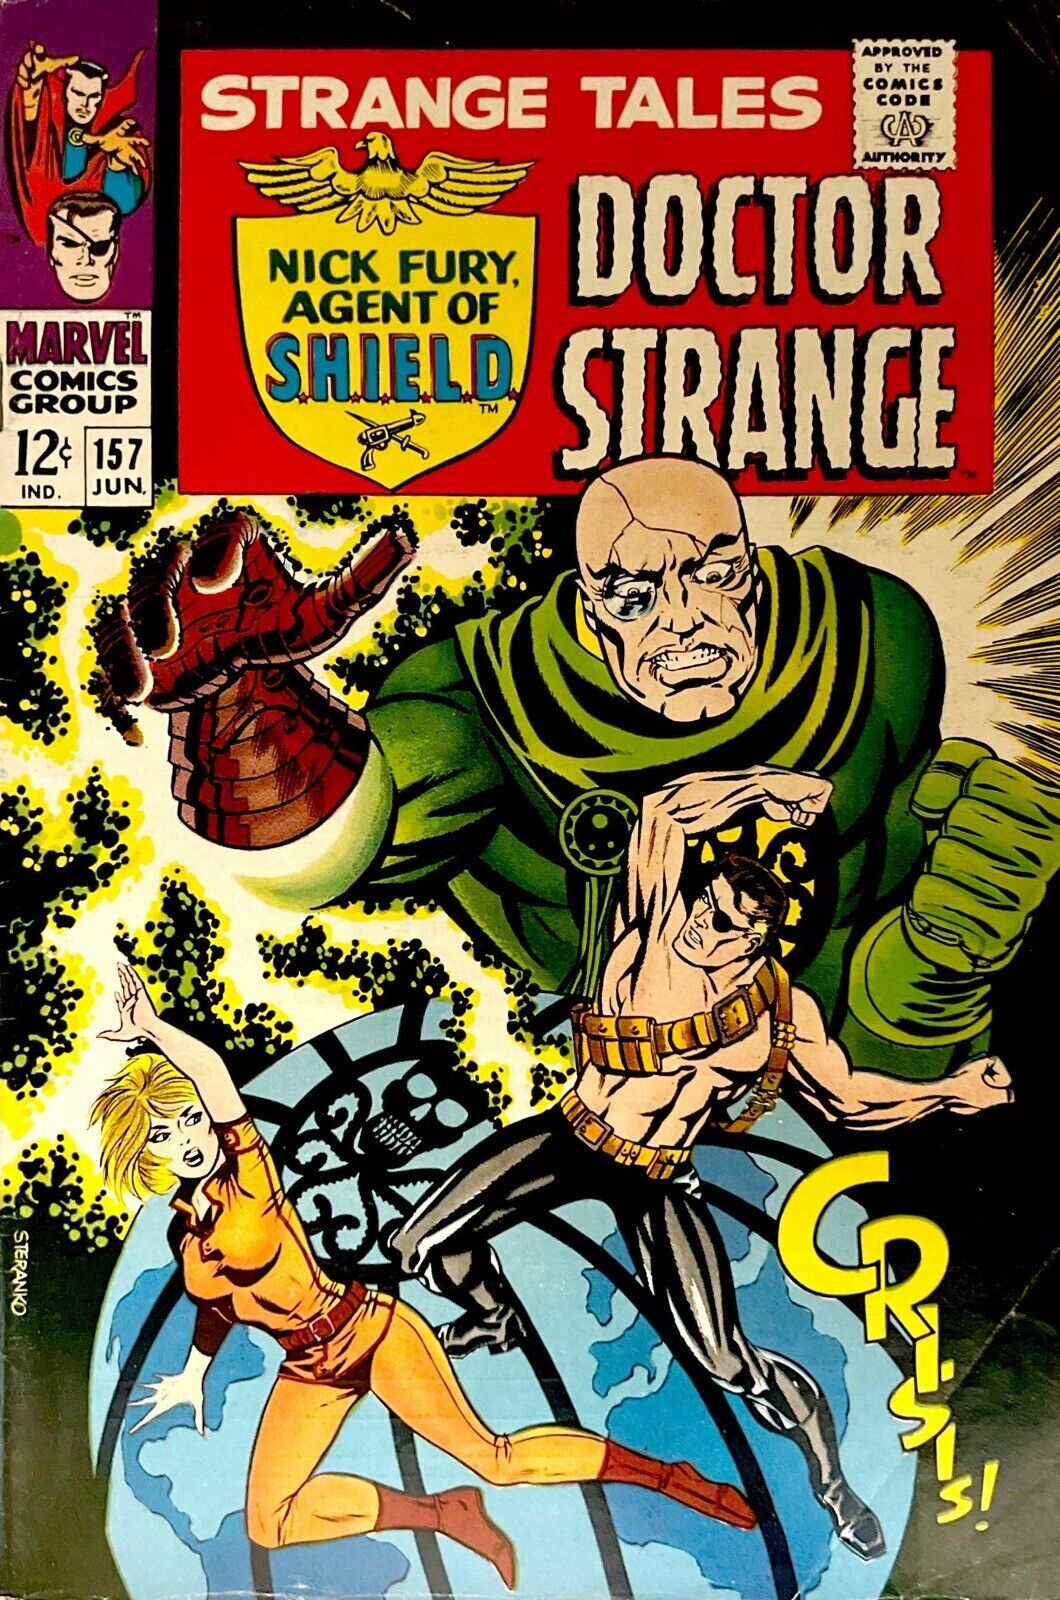 Strange Tales #157 (Marvel Comics June 1967)